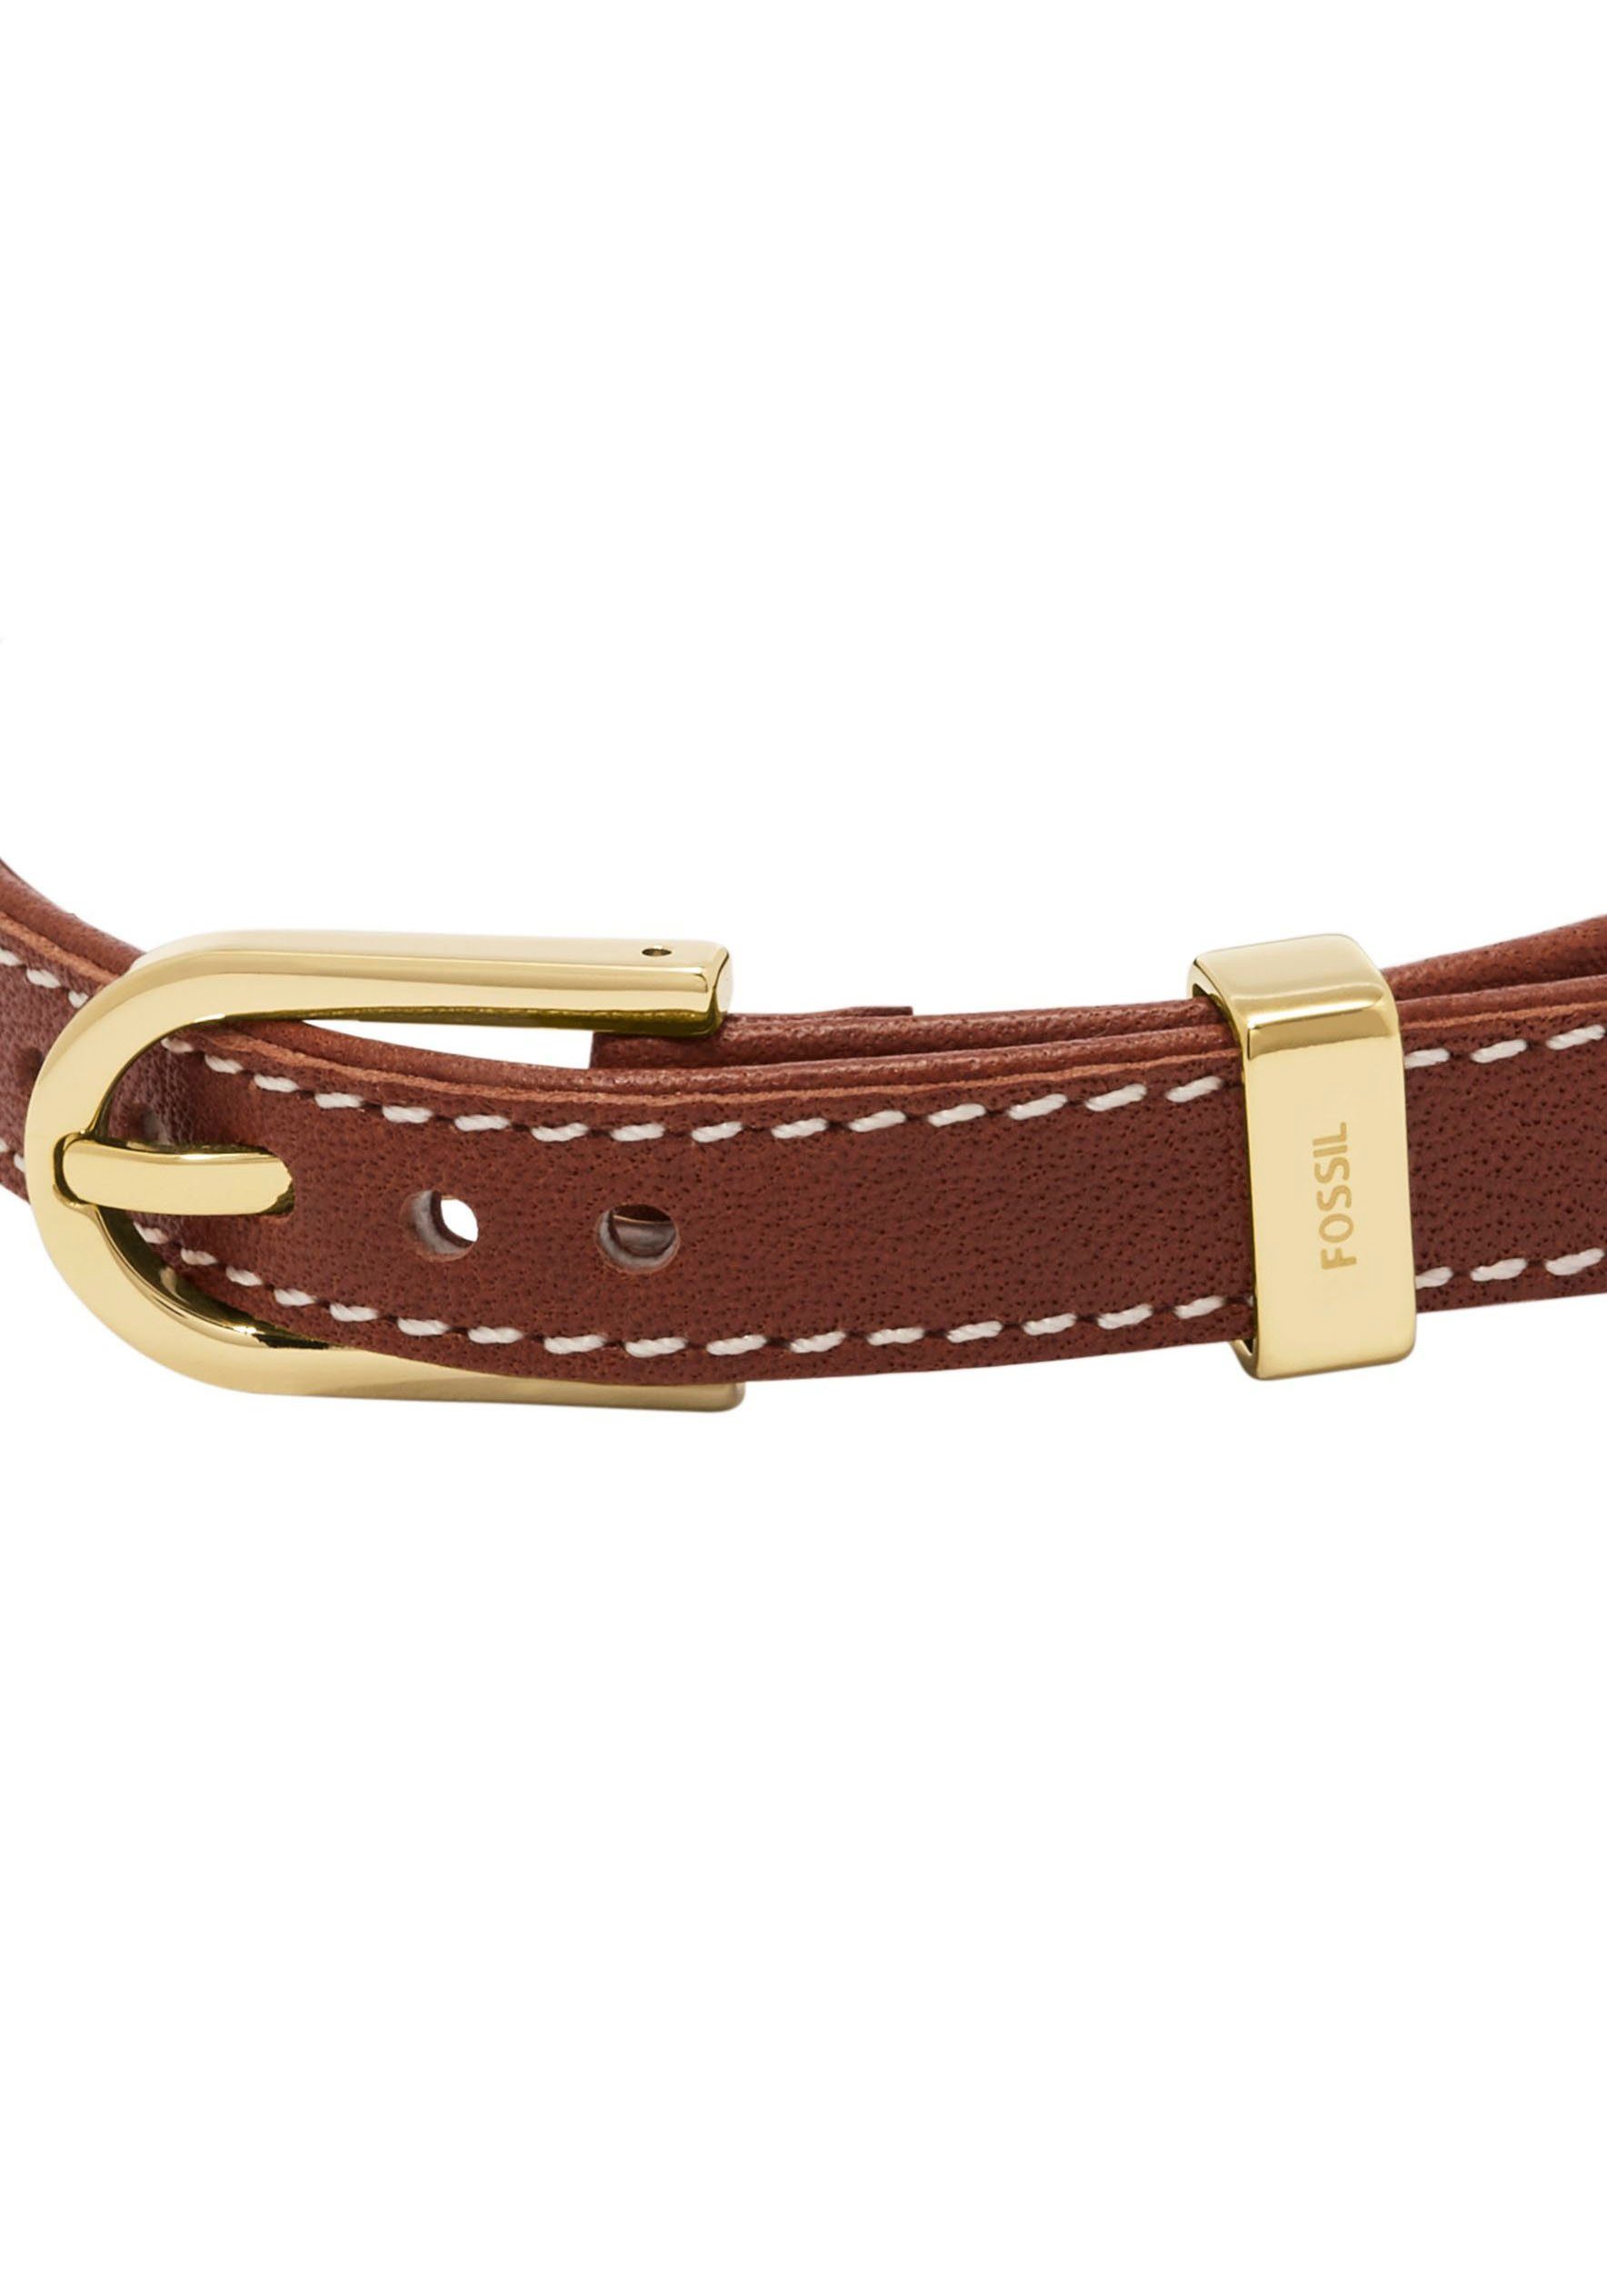 Strap Bracelet Armband gelbgoldfarben Leather HERITAGE JF04368710,JF04372791, Fossil